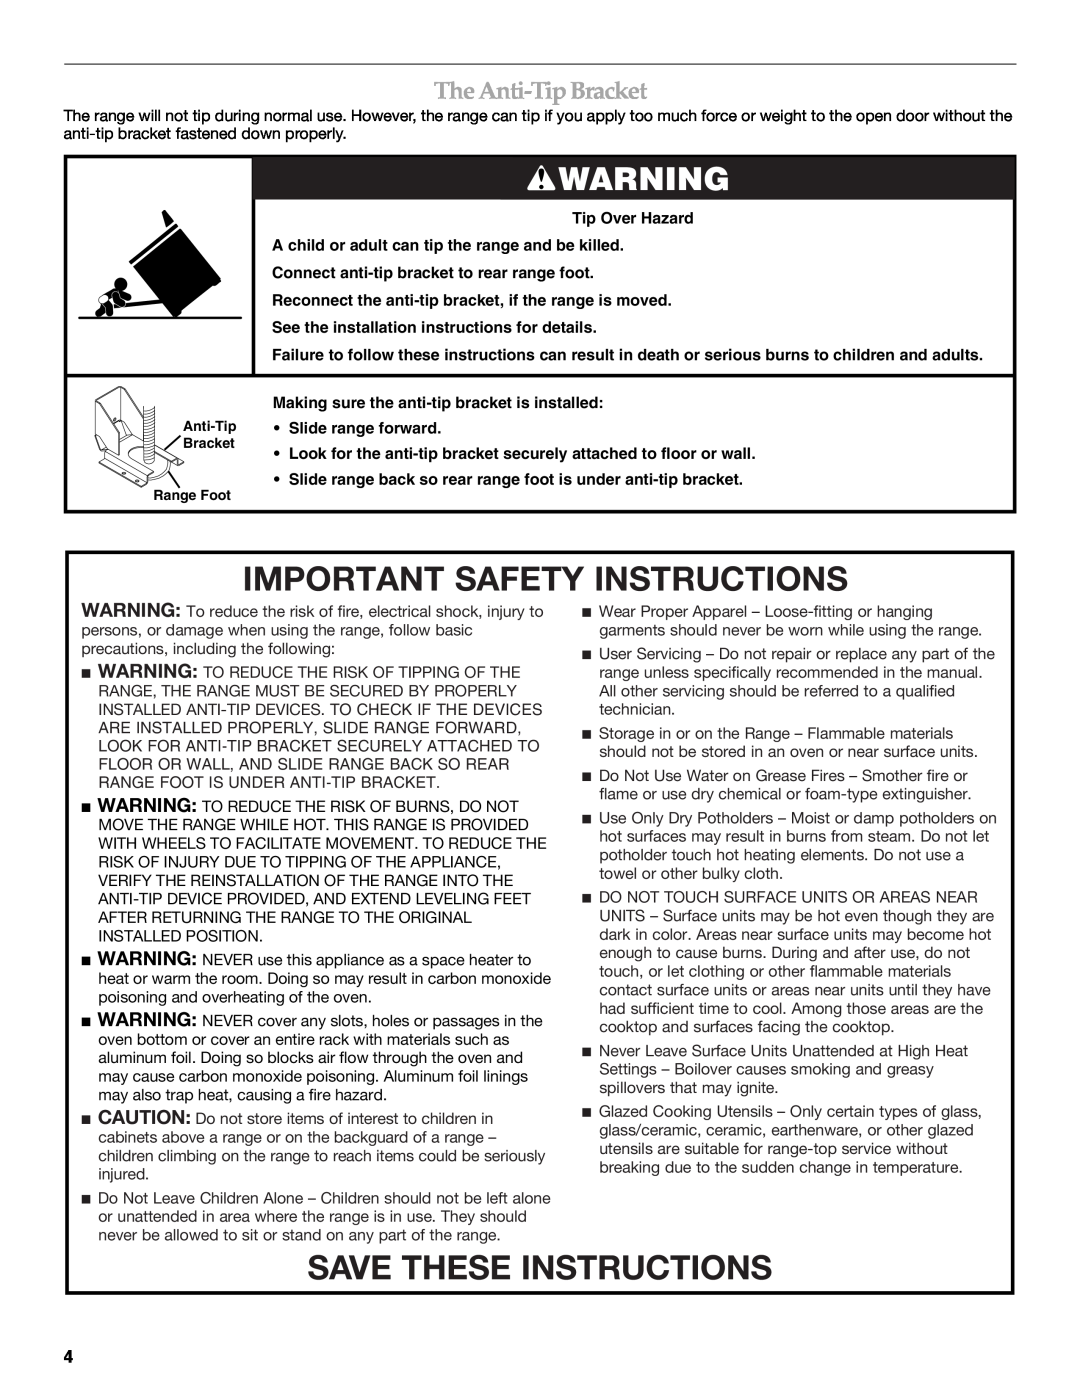 KitchenAid KDRS462, KDRS467, KDRS463, KDRS483 Important Safety Instructions, Save These Instructions, The Anti-Tip Bracket 